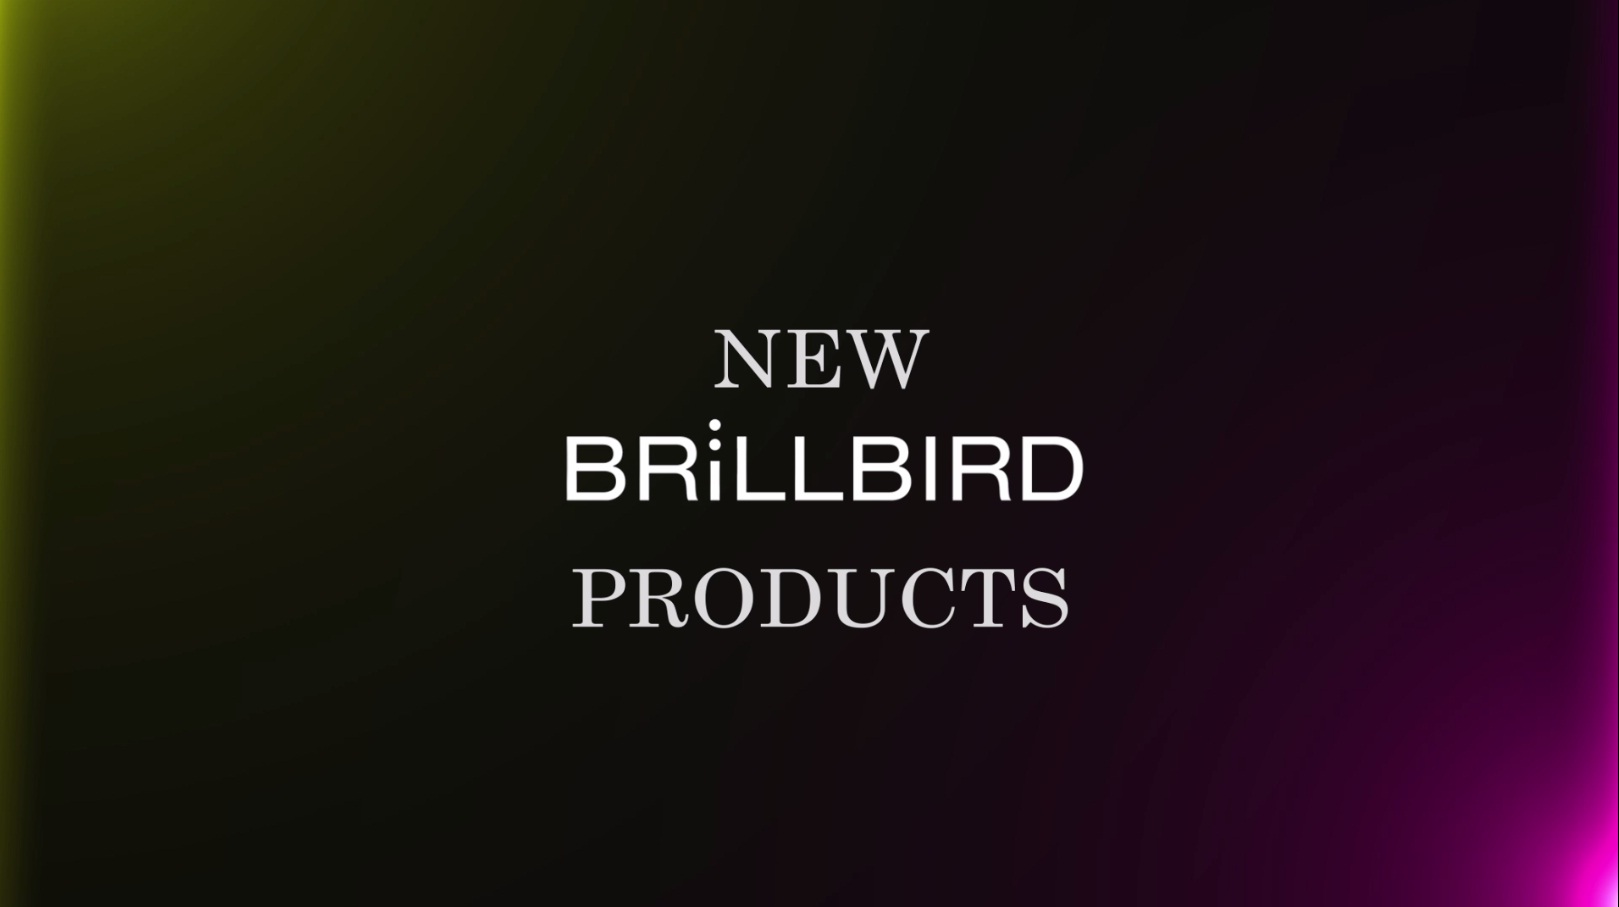 New BrillBird products 2017 spring/summer